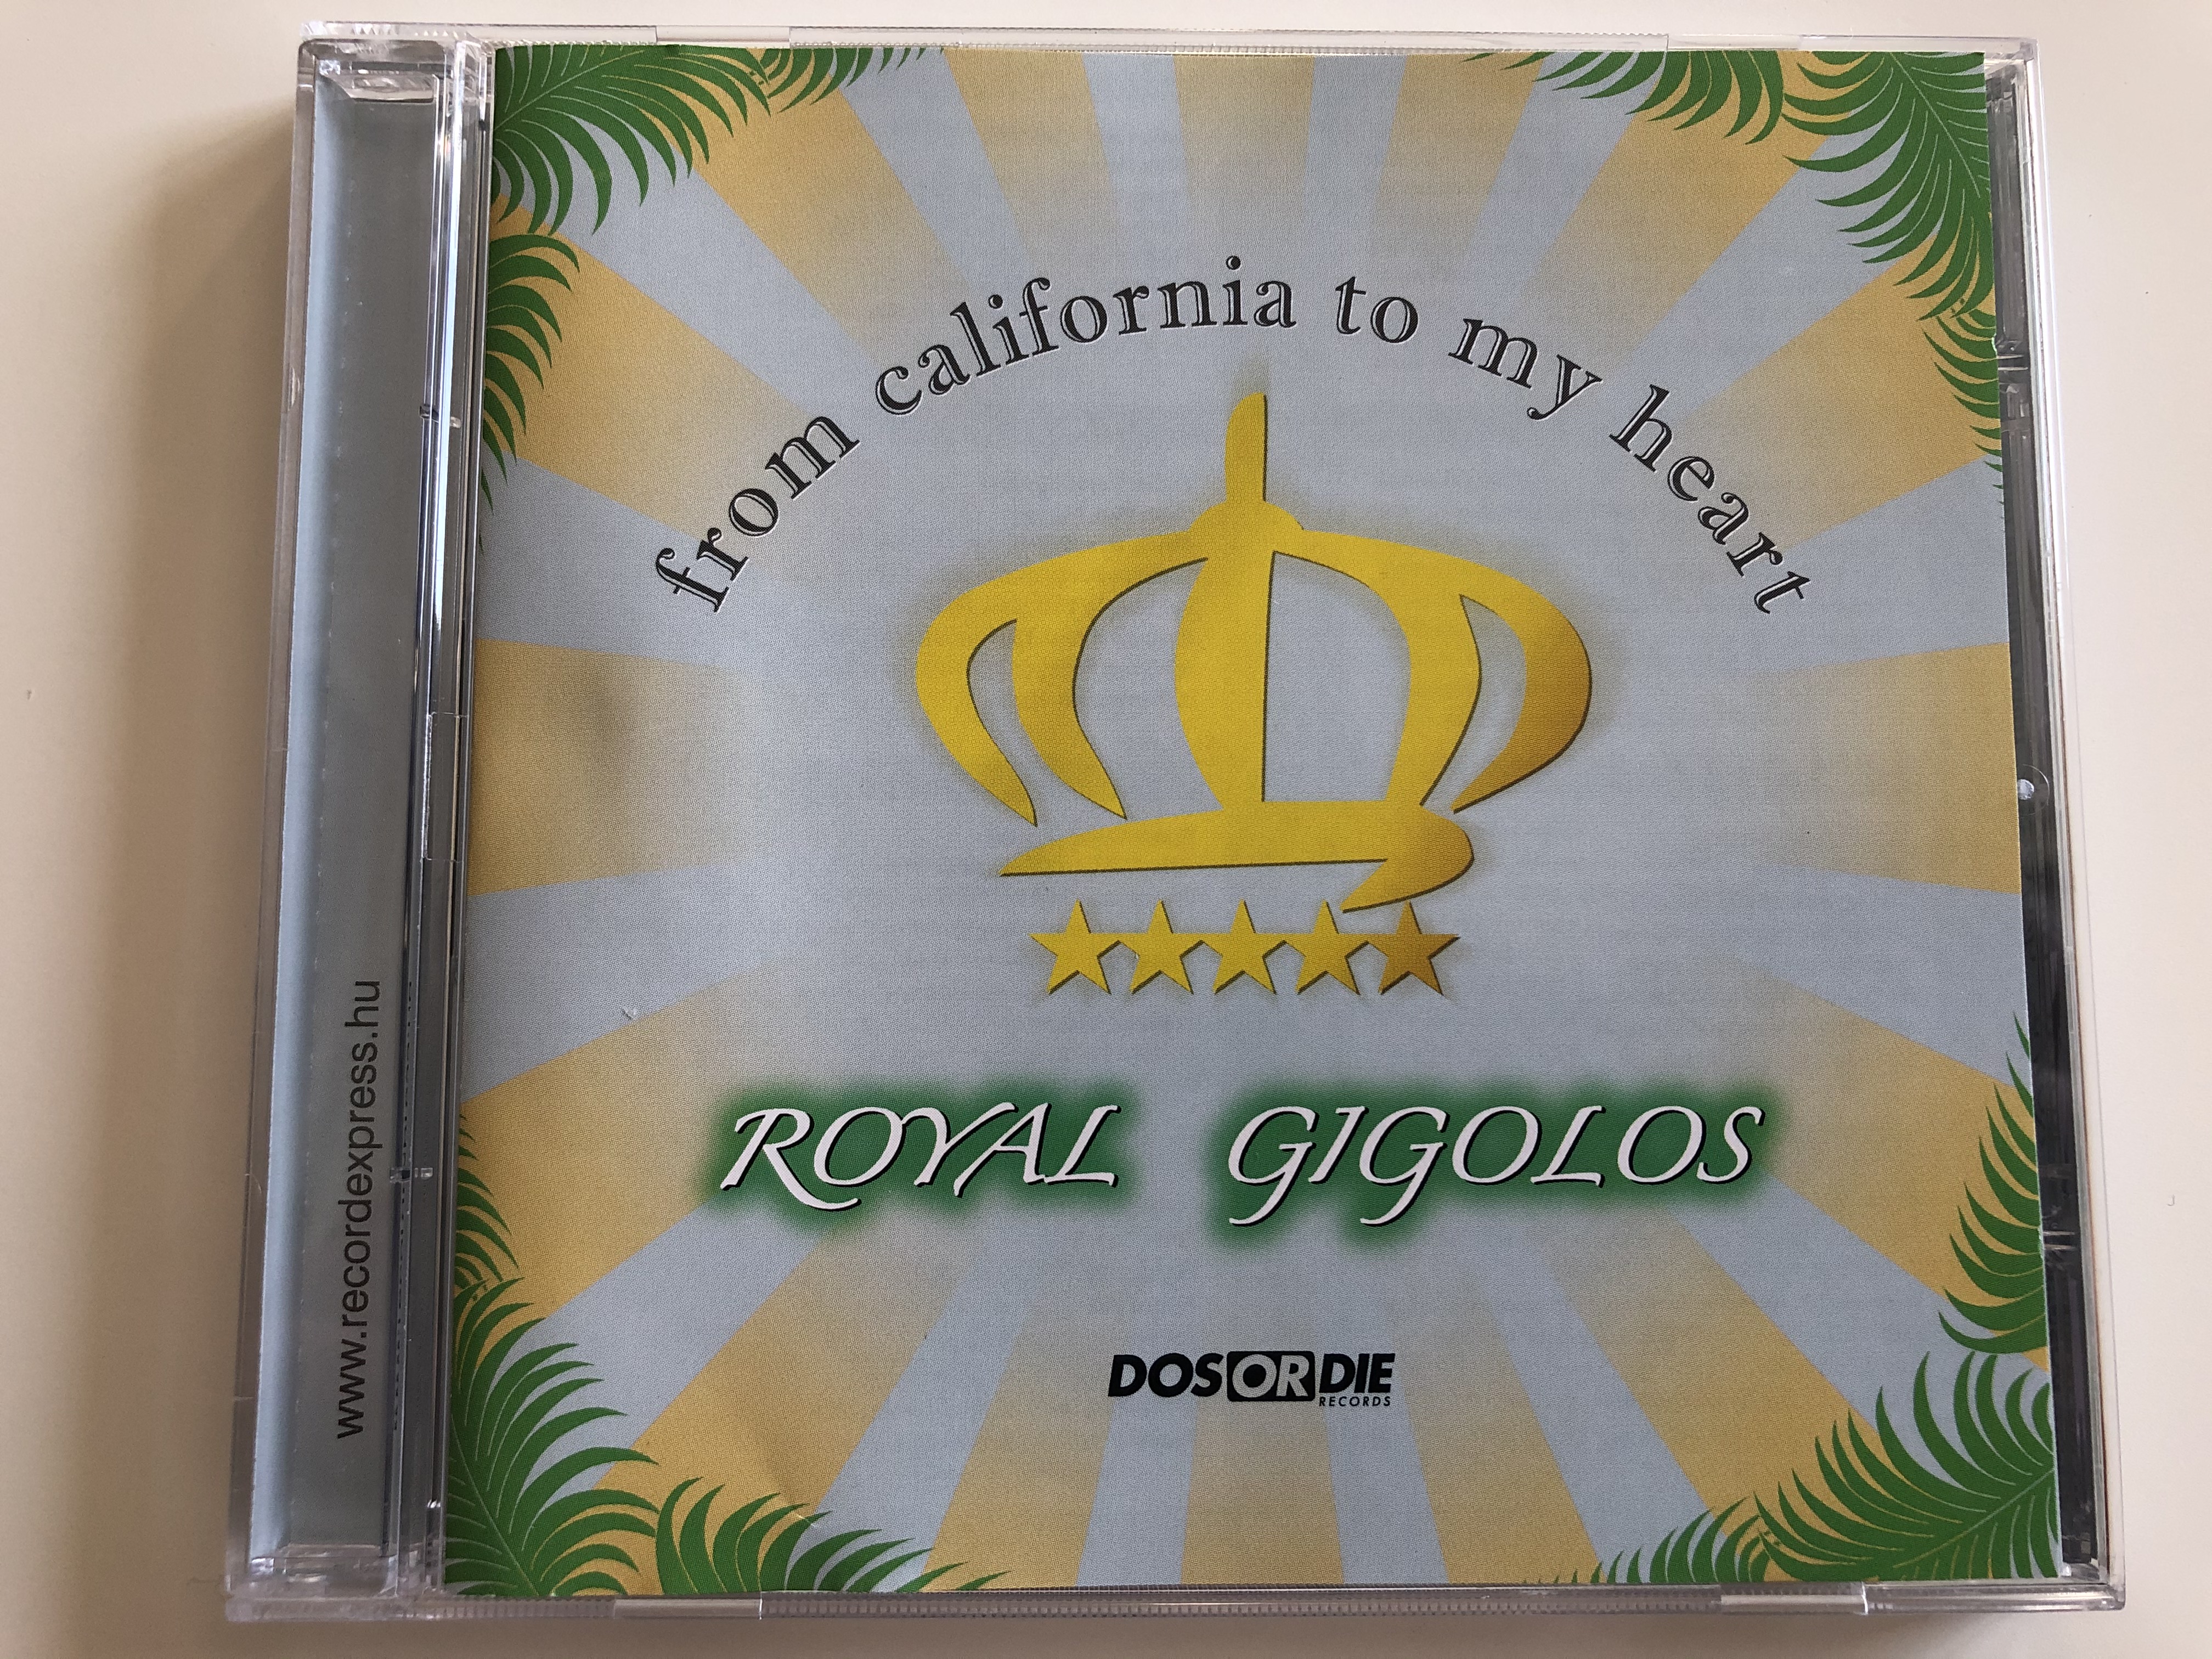 from-california-to-my-heart-royal-gigolos-record-express-audio-cd-2006-rec-255299-2-1-.jpg